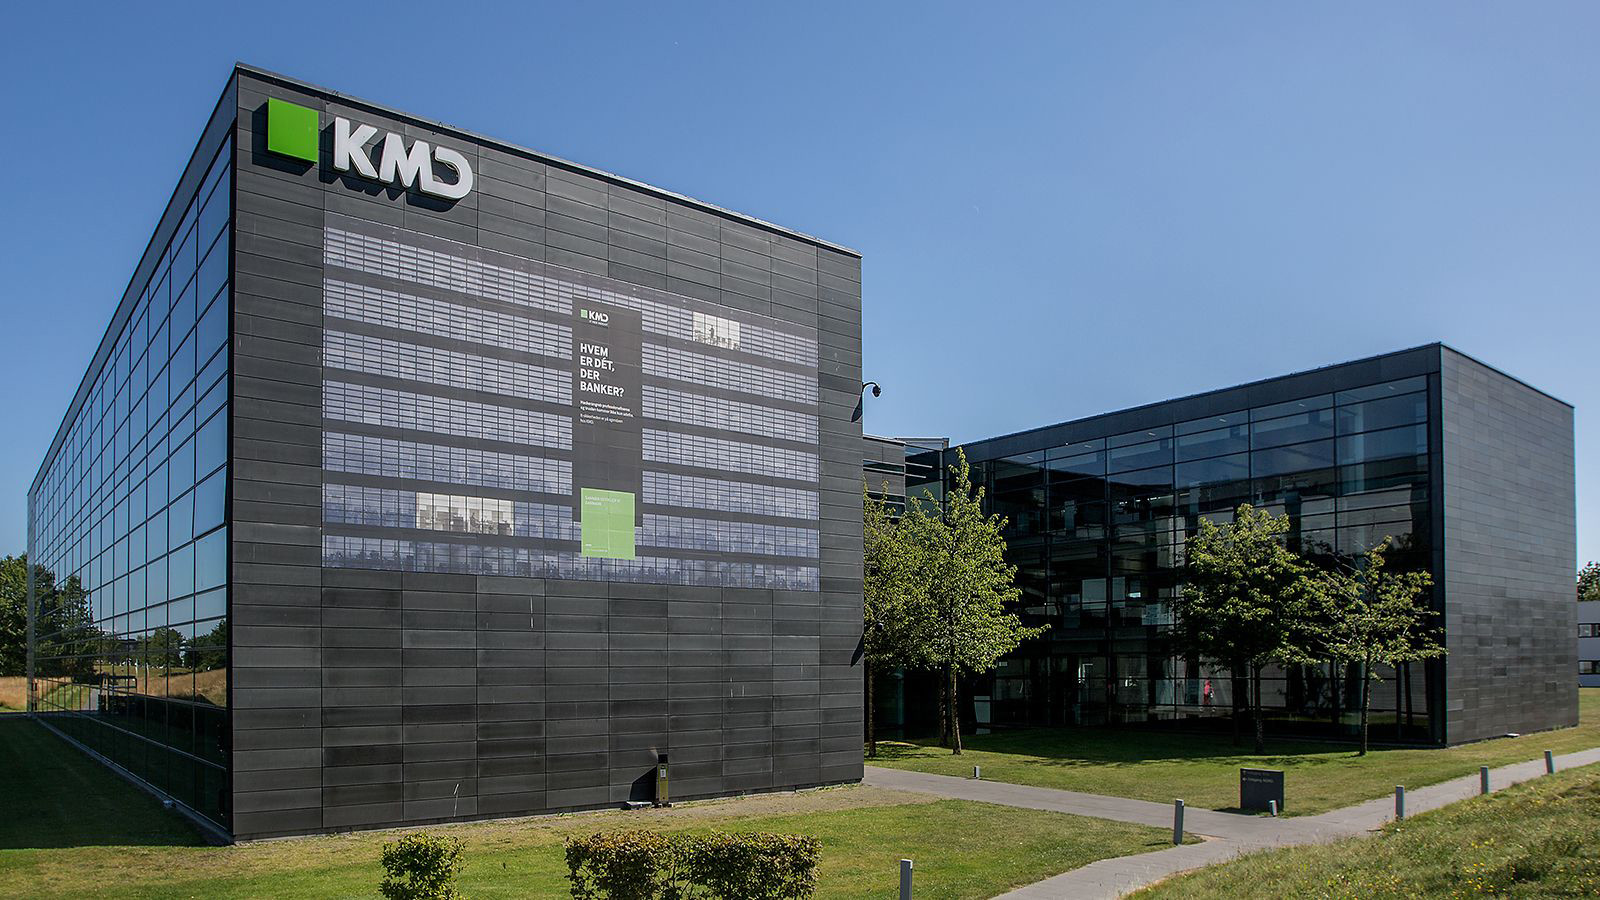 KMD Acquires Banqsoft